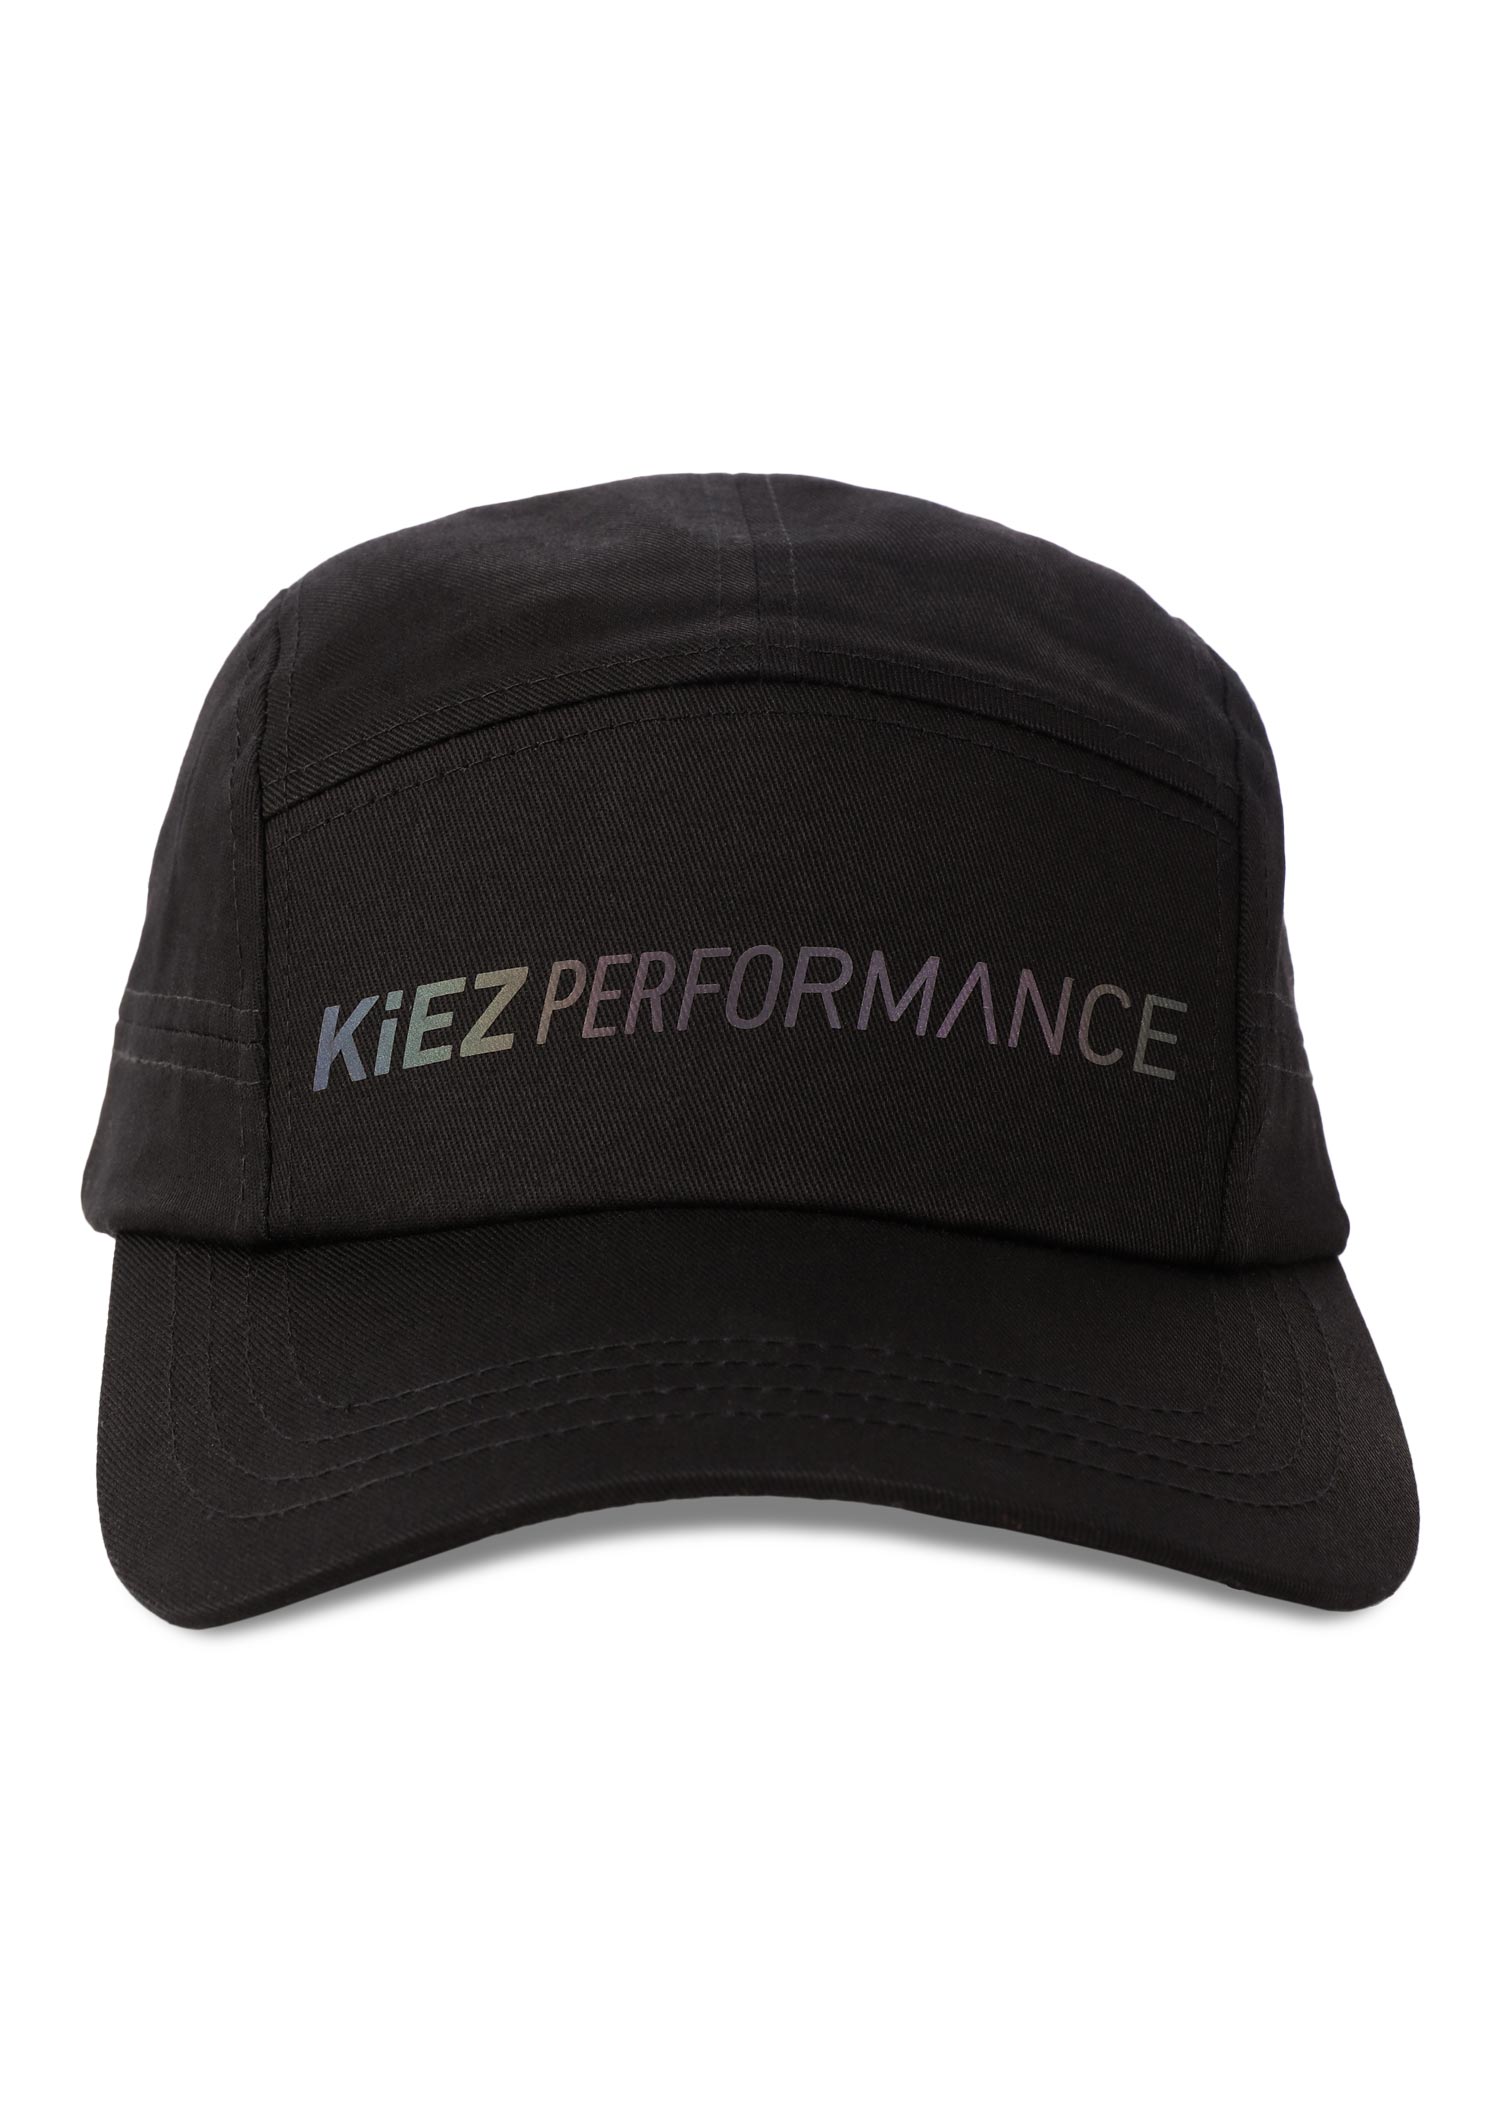 DIIY - Kappe "Kiez Performance"